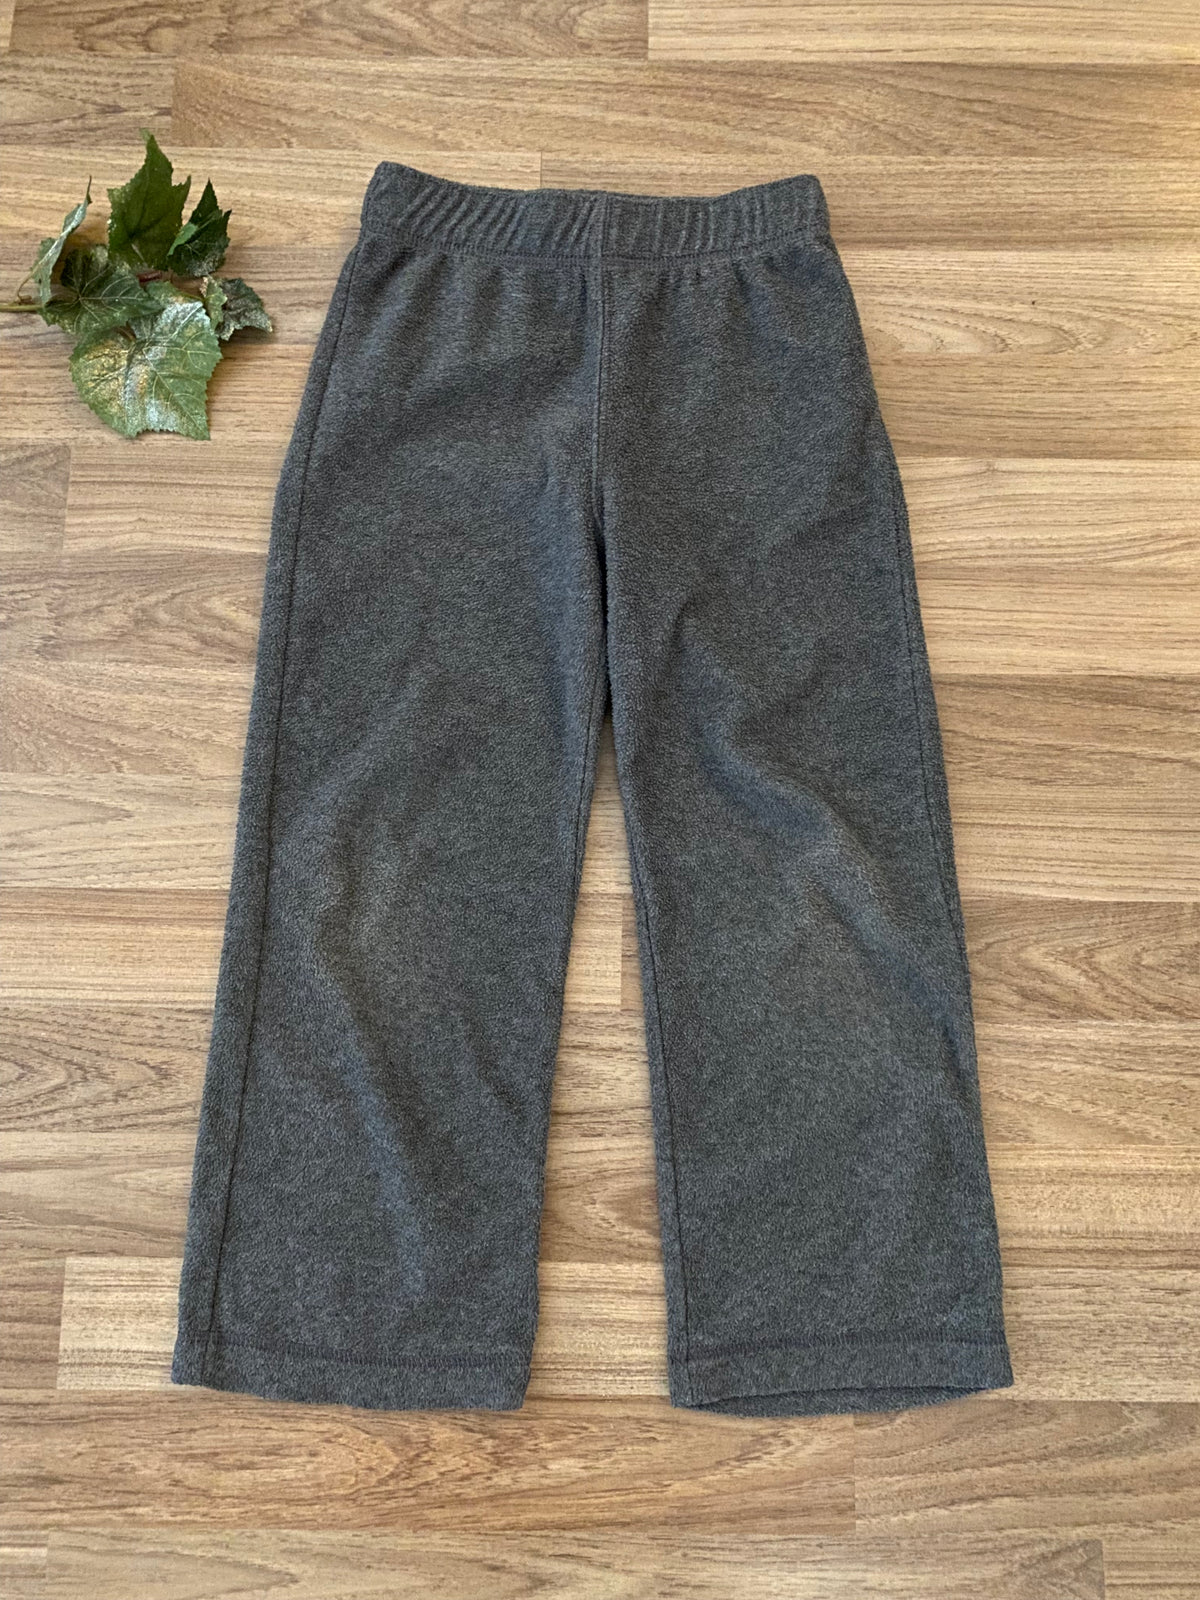 Fleece Pants (Boys Size 5-6)